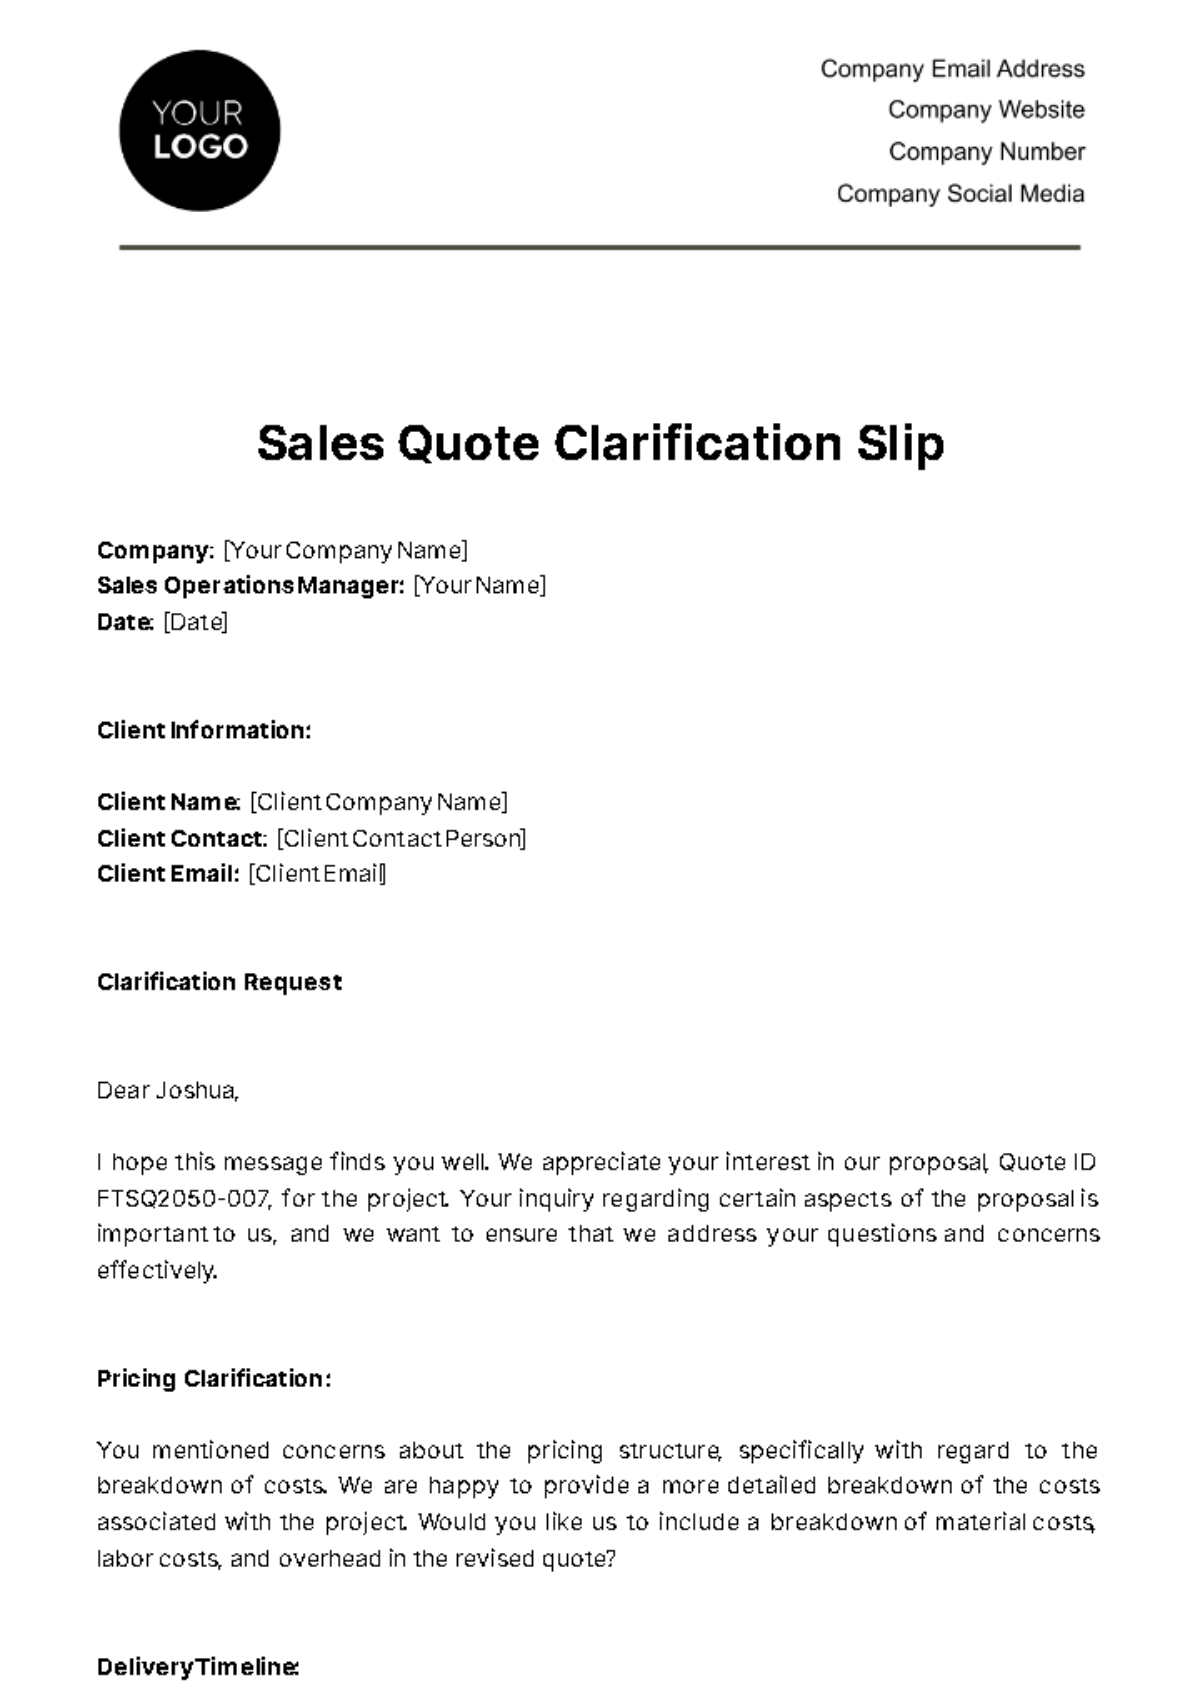 Sales Quote Clarification Slip Template